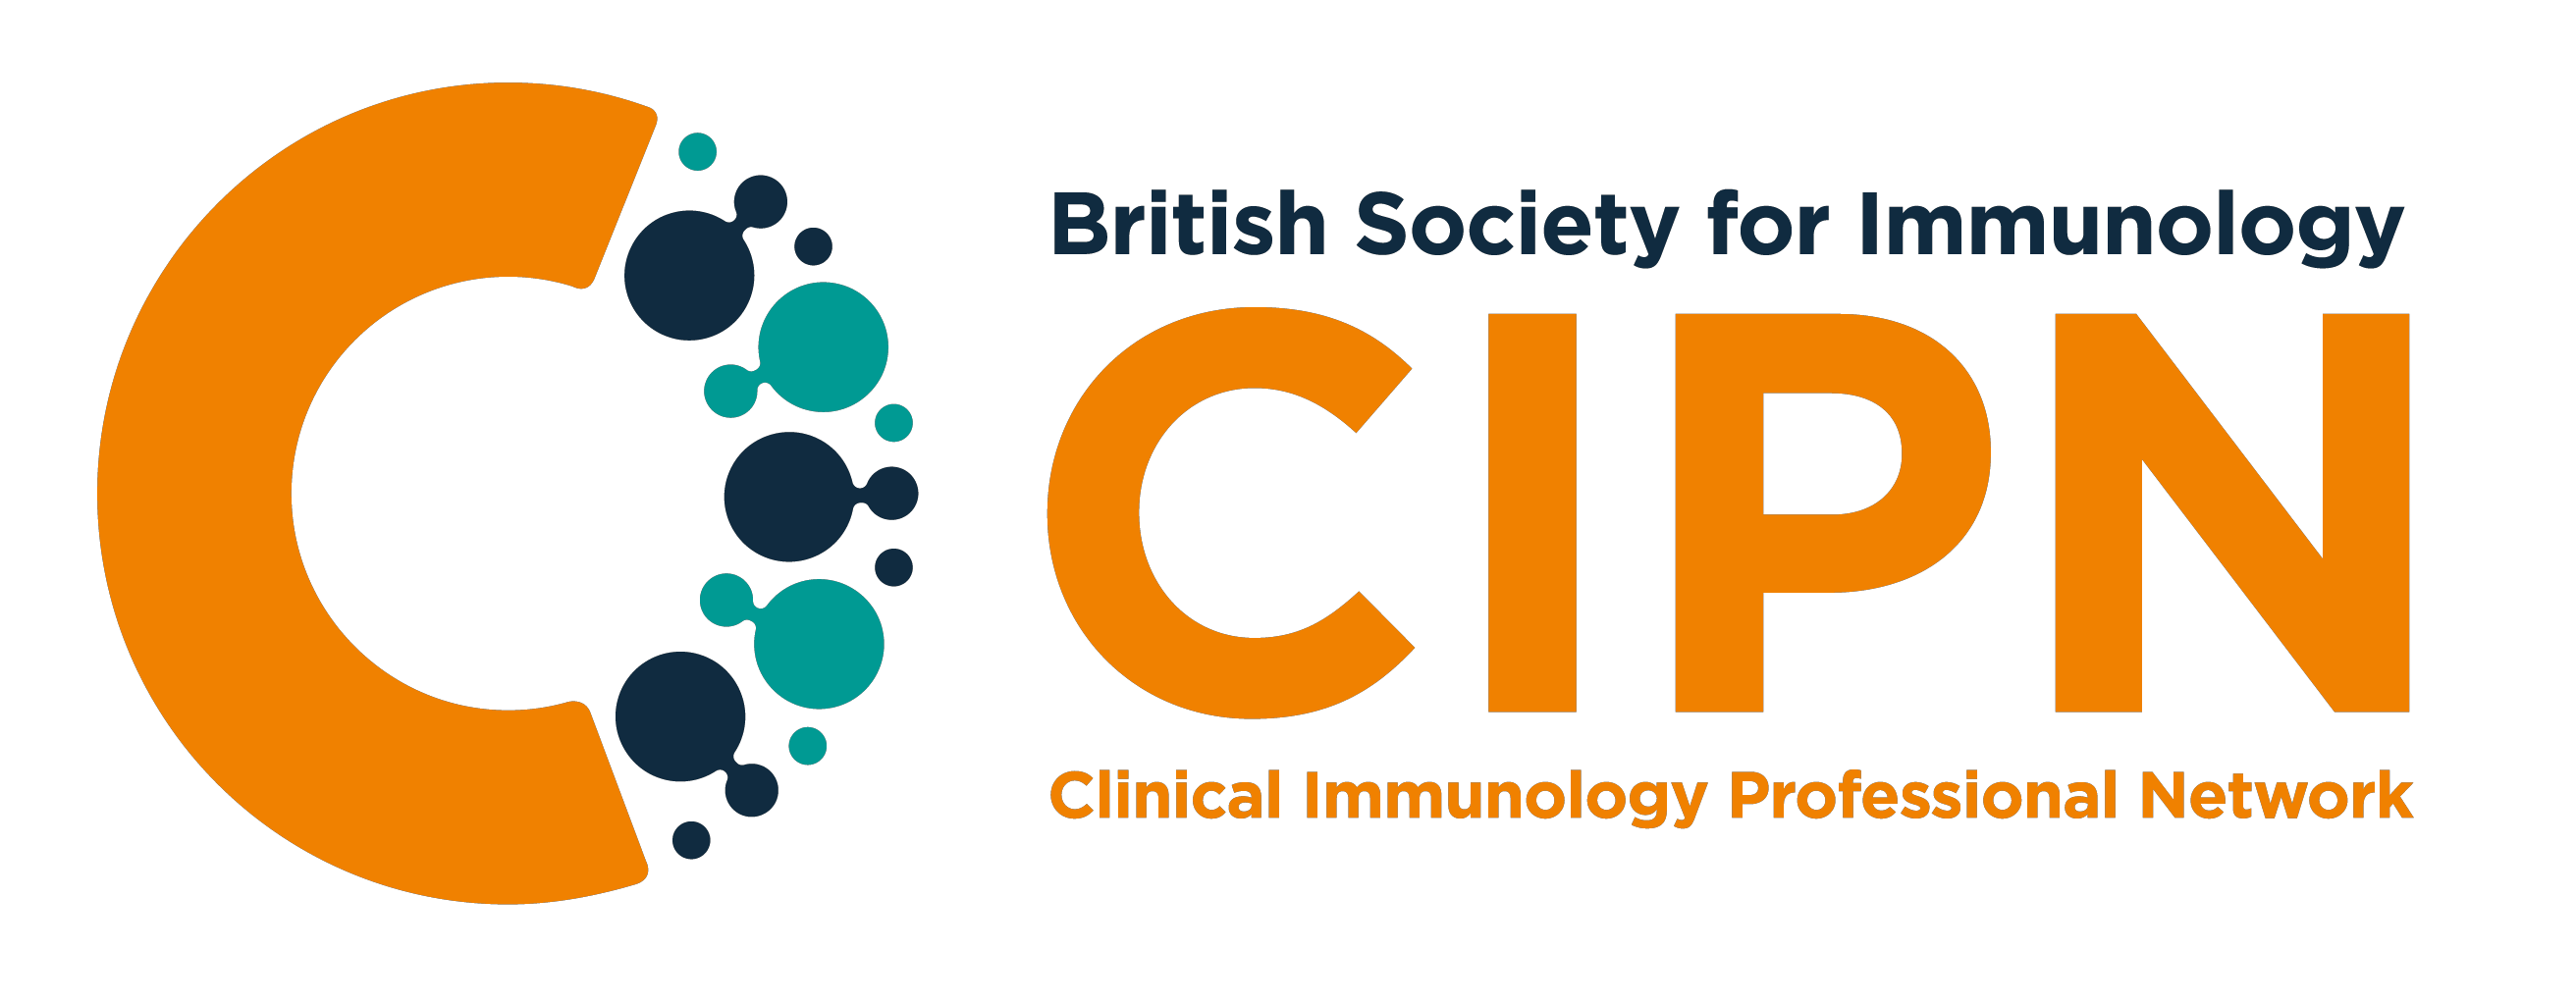 BSI-CIPN logo